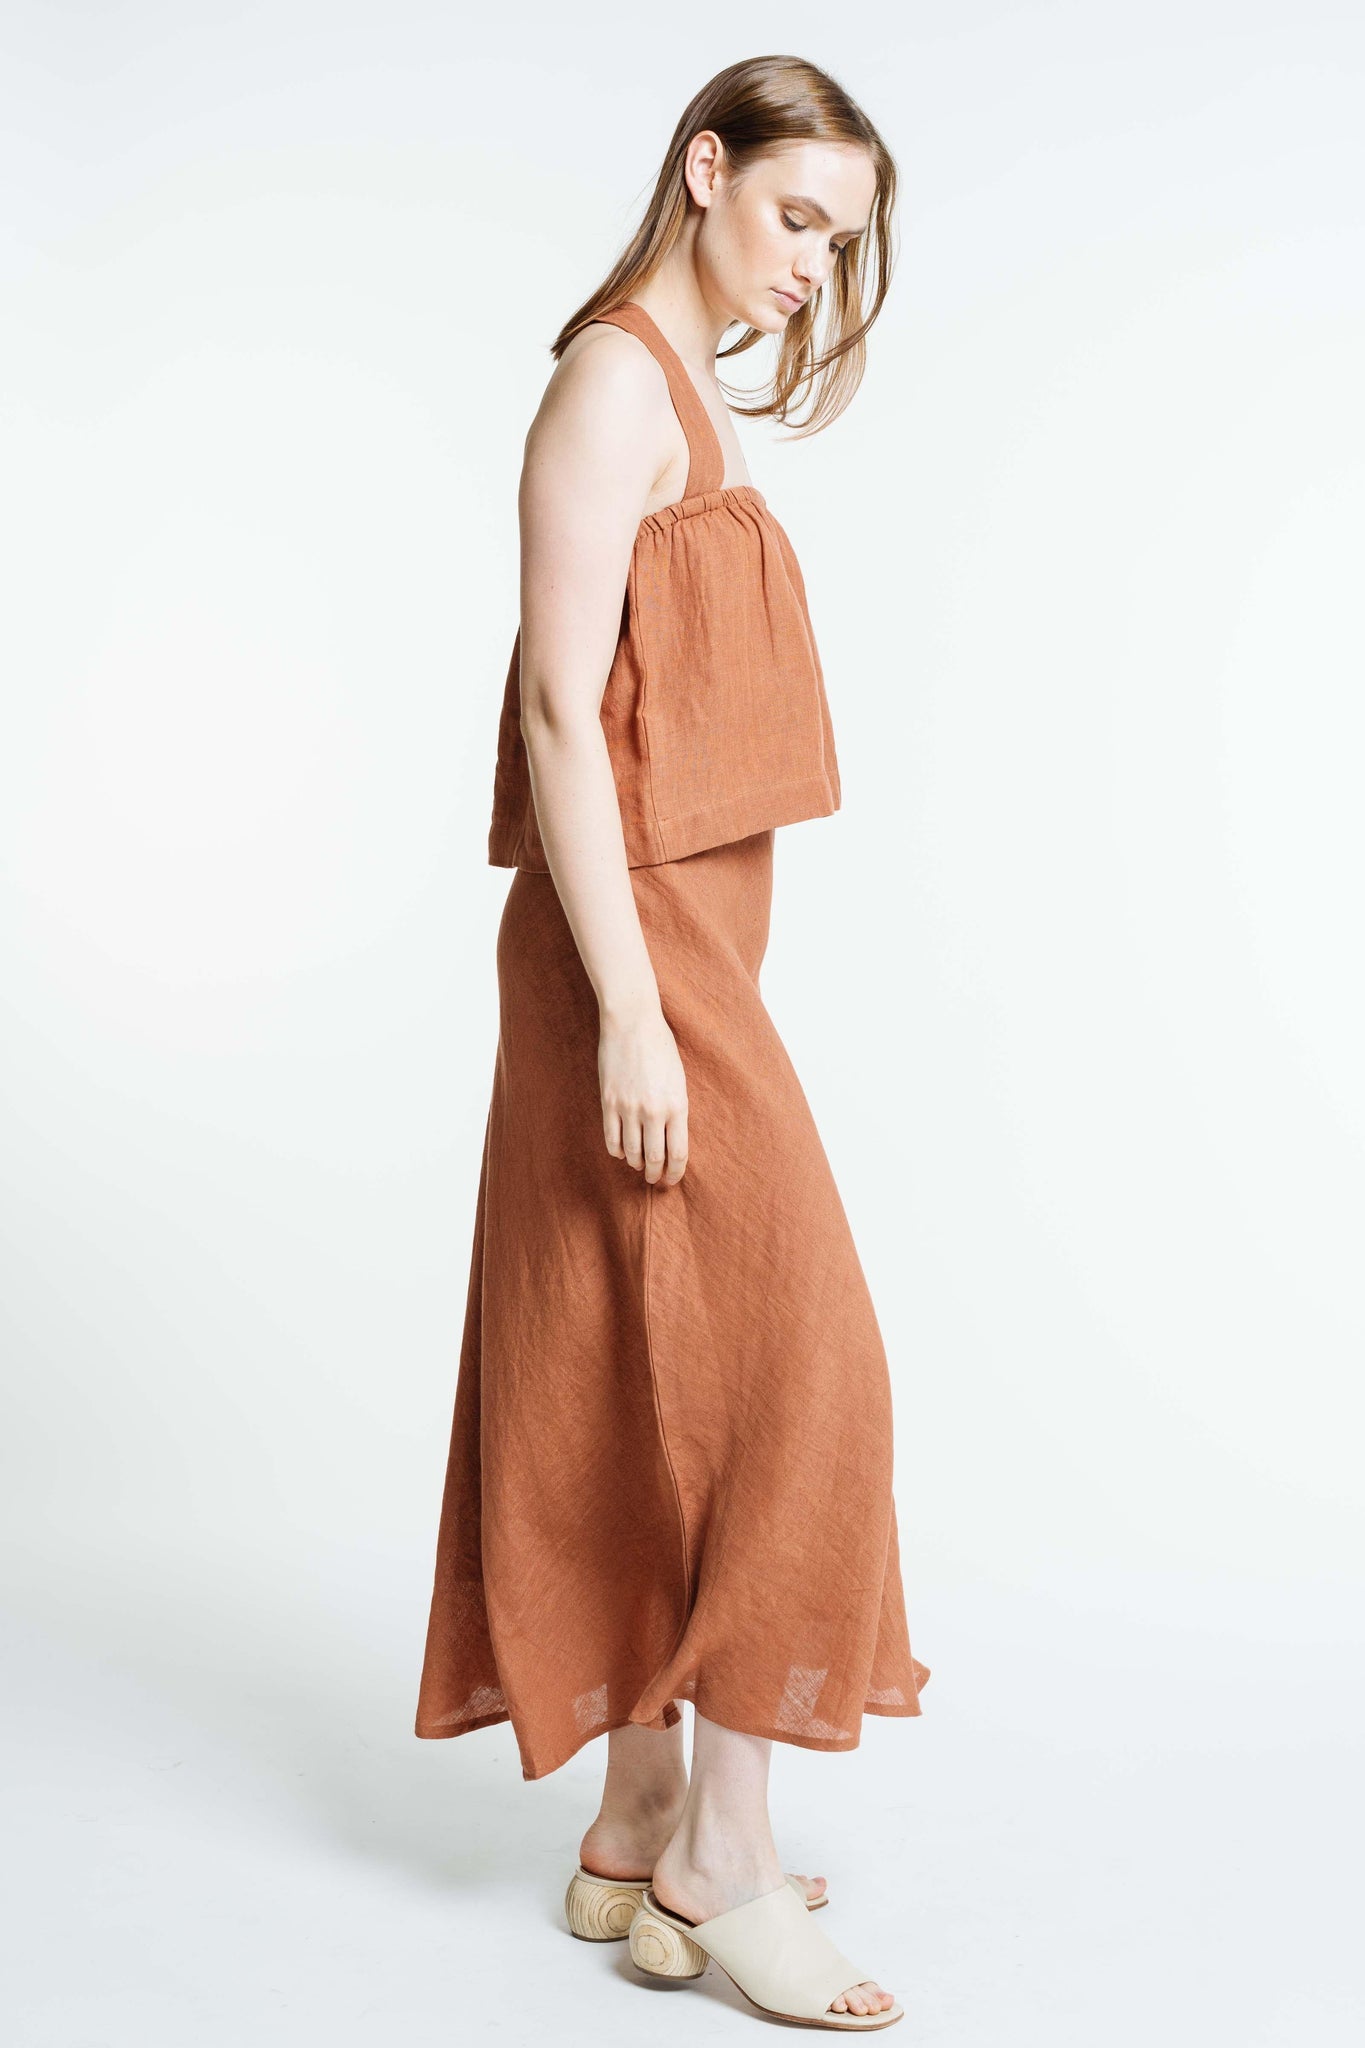 The model is wearing a Breeze Tank - Amber Brown - Sample linen dress.